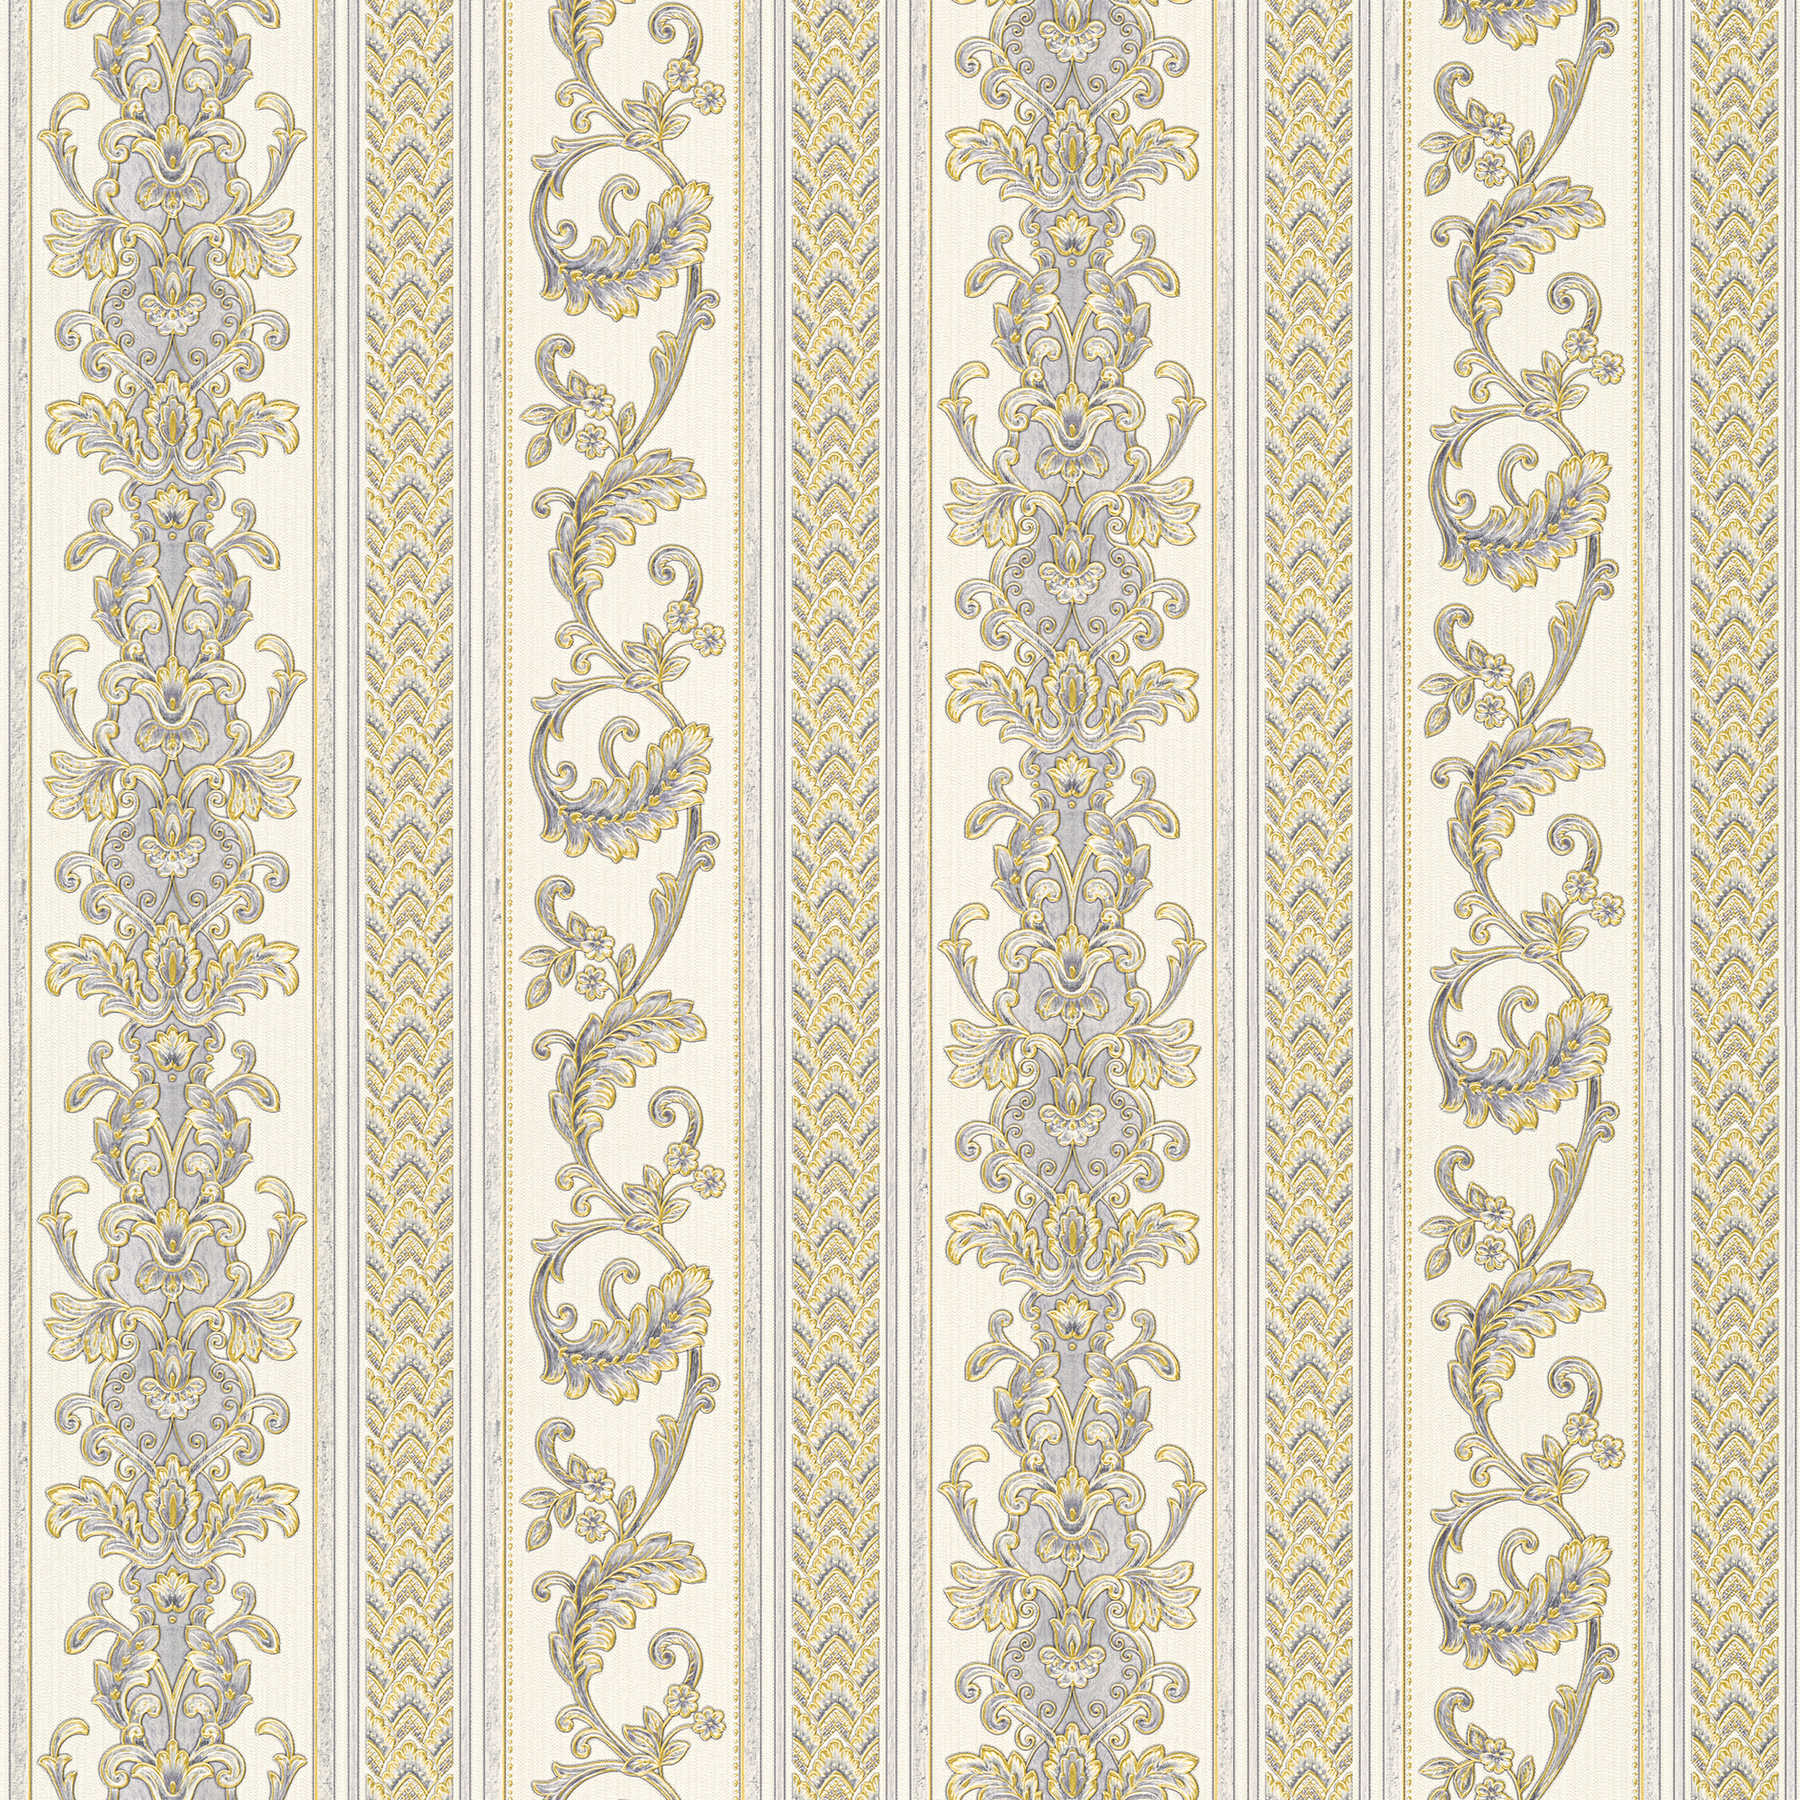 Metallic wallpaper with silver & gold ornaments - cream
